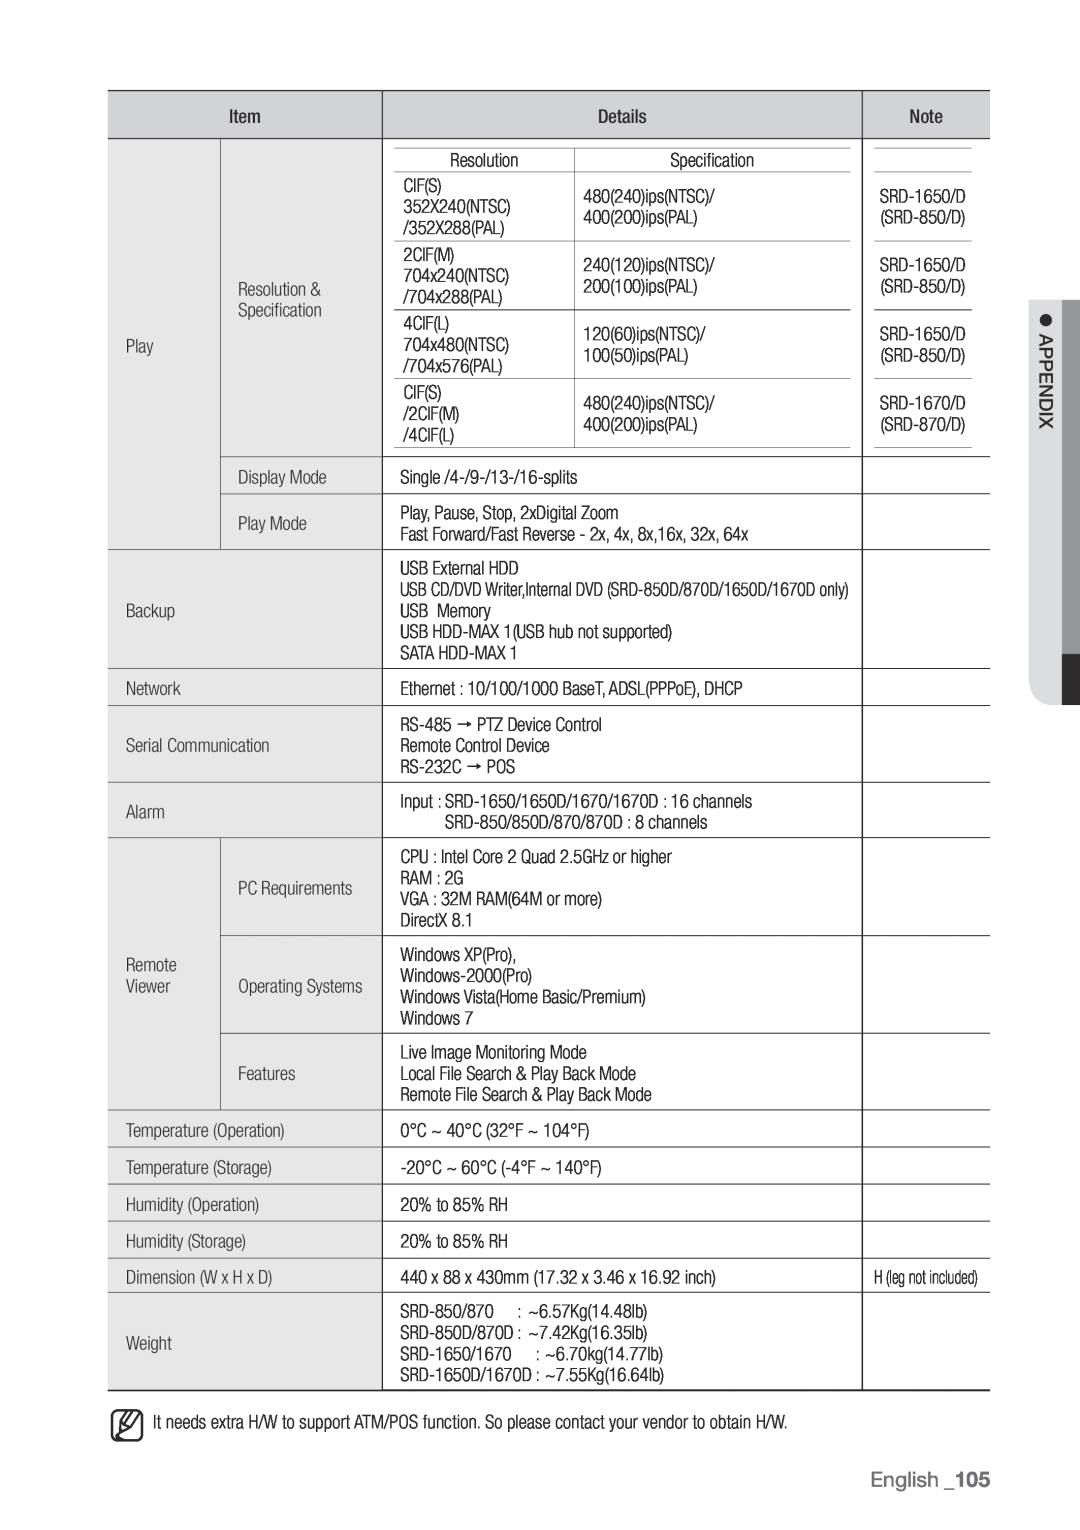 Samsung 870D, 1670D, 1650D English, Operating Systems, Single /4-/9-/13-/16-splits, Windows VistaHome Basic/Premium 